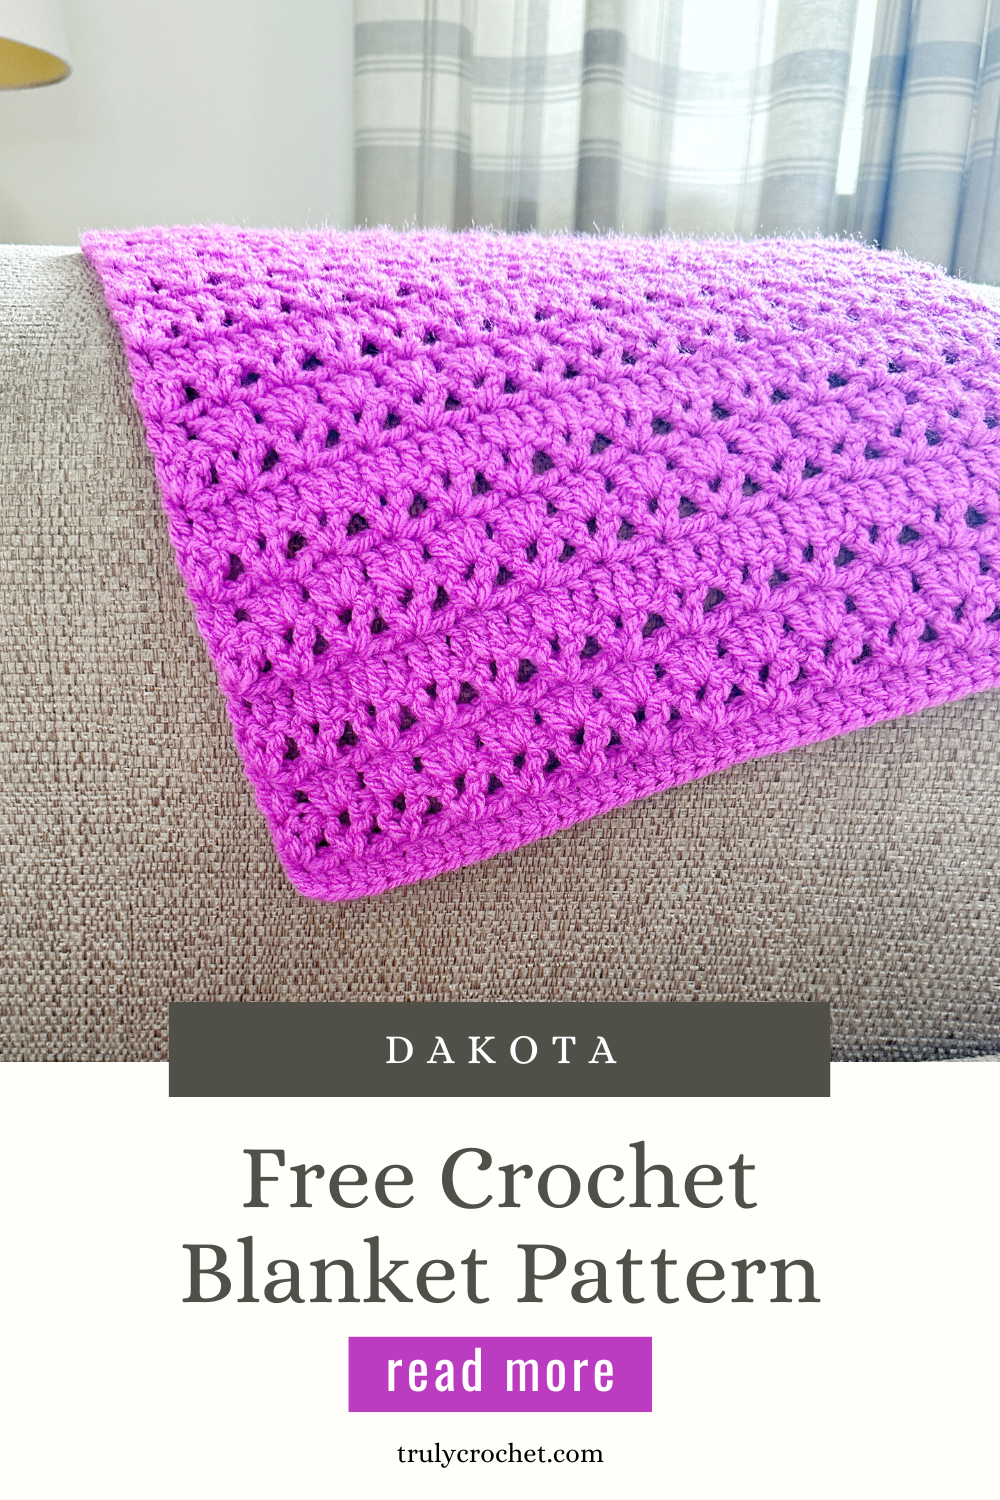 Dakota Blanket - Free Crochet Pattern